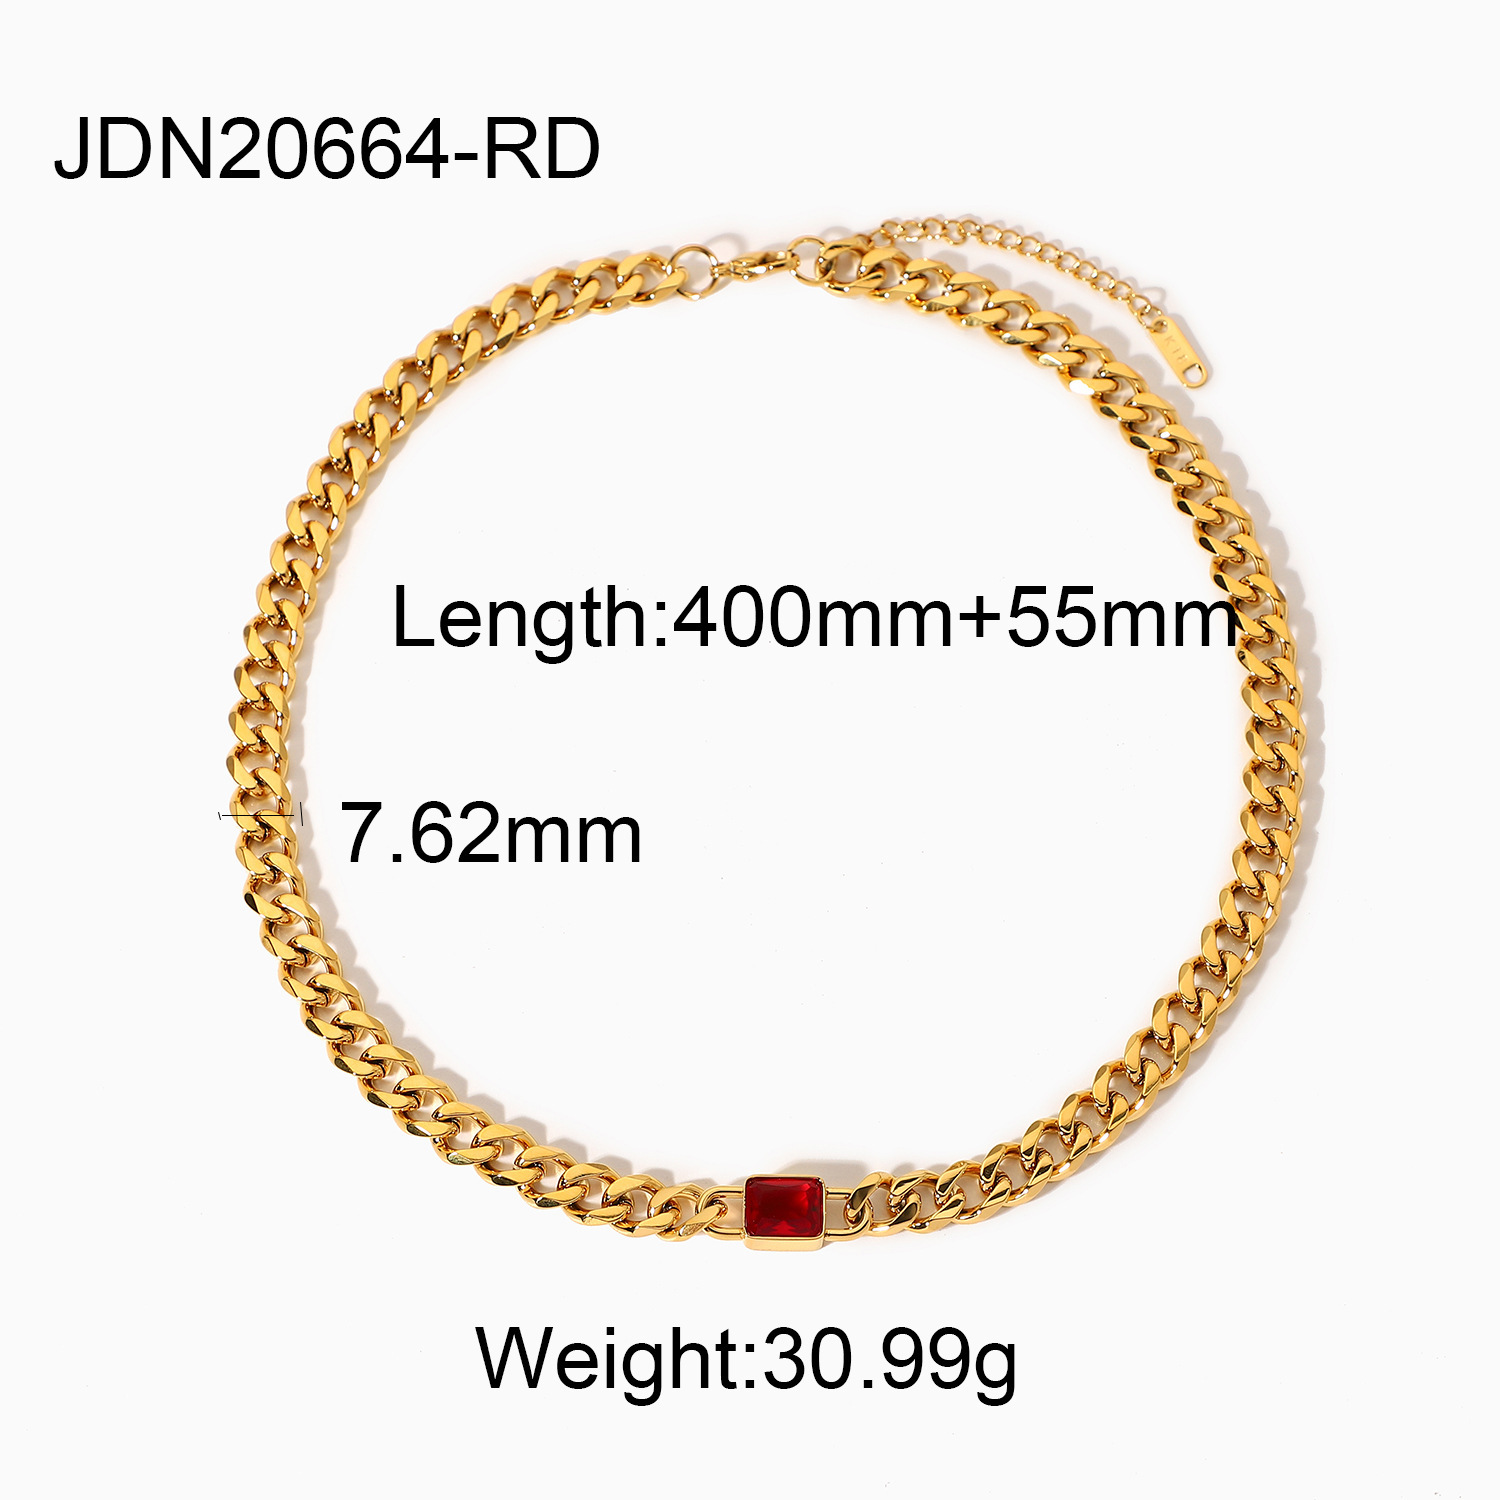 2:JDN20664-RD